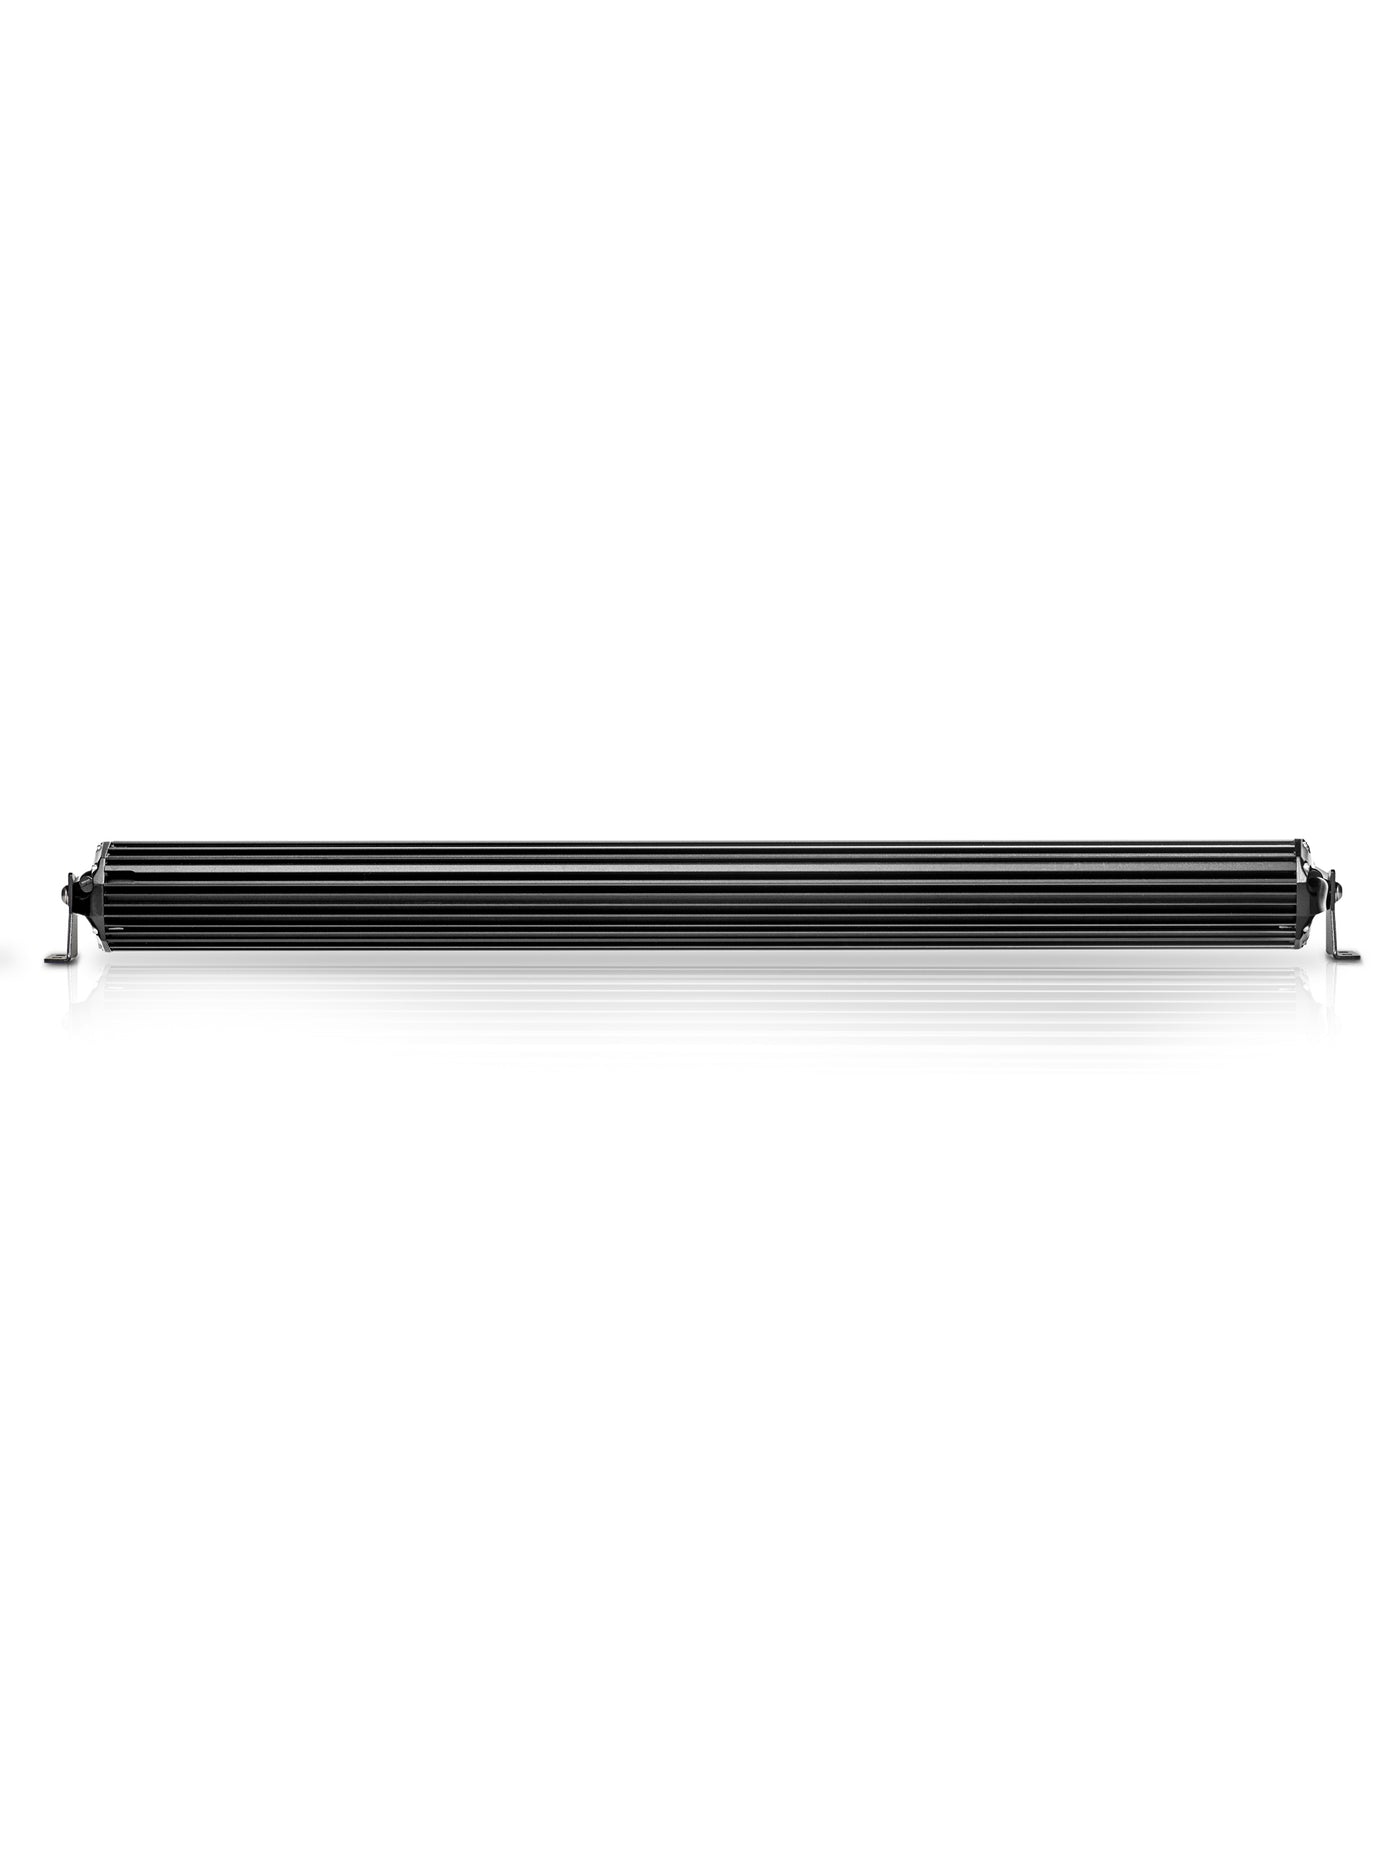 30" Flood/Spot Combo Dual Row LED Light Bar - Slim -North Lights